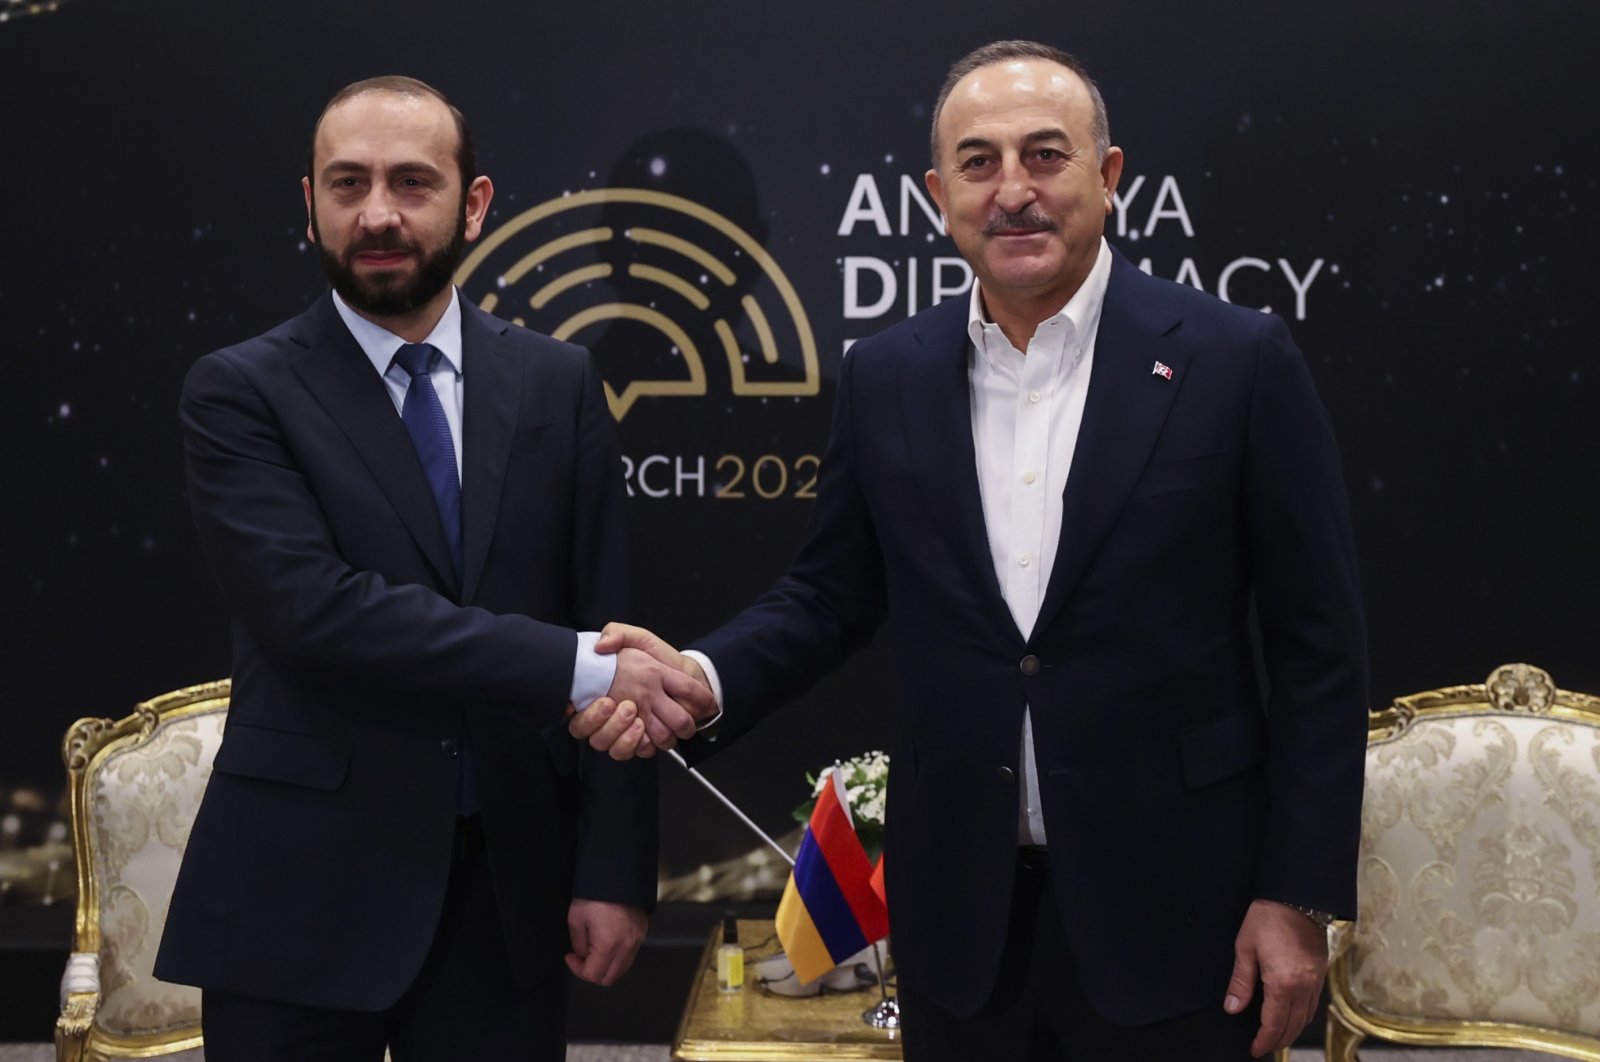 Foreign Minister Mevlüt Çavuşoğlu (R) shakes hands with Armenia&#039;s Foreign Minister Ararat Mirzoyan on the sidelines of the Antalya Diplomacy Forum in Antalya, Turkey, March 12, 2022. (AP Photo)